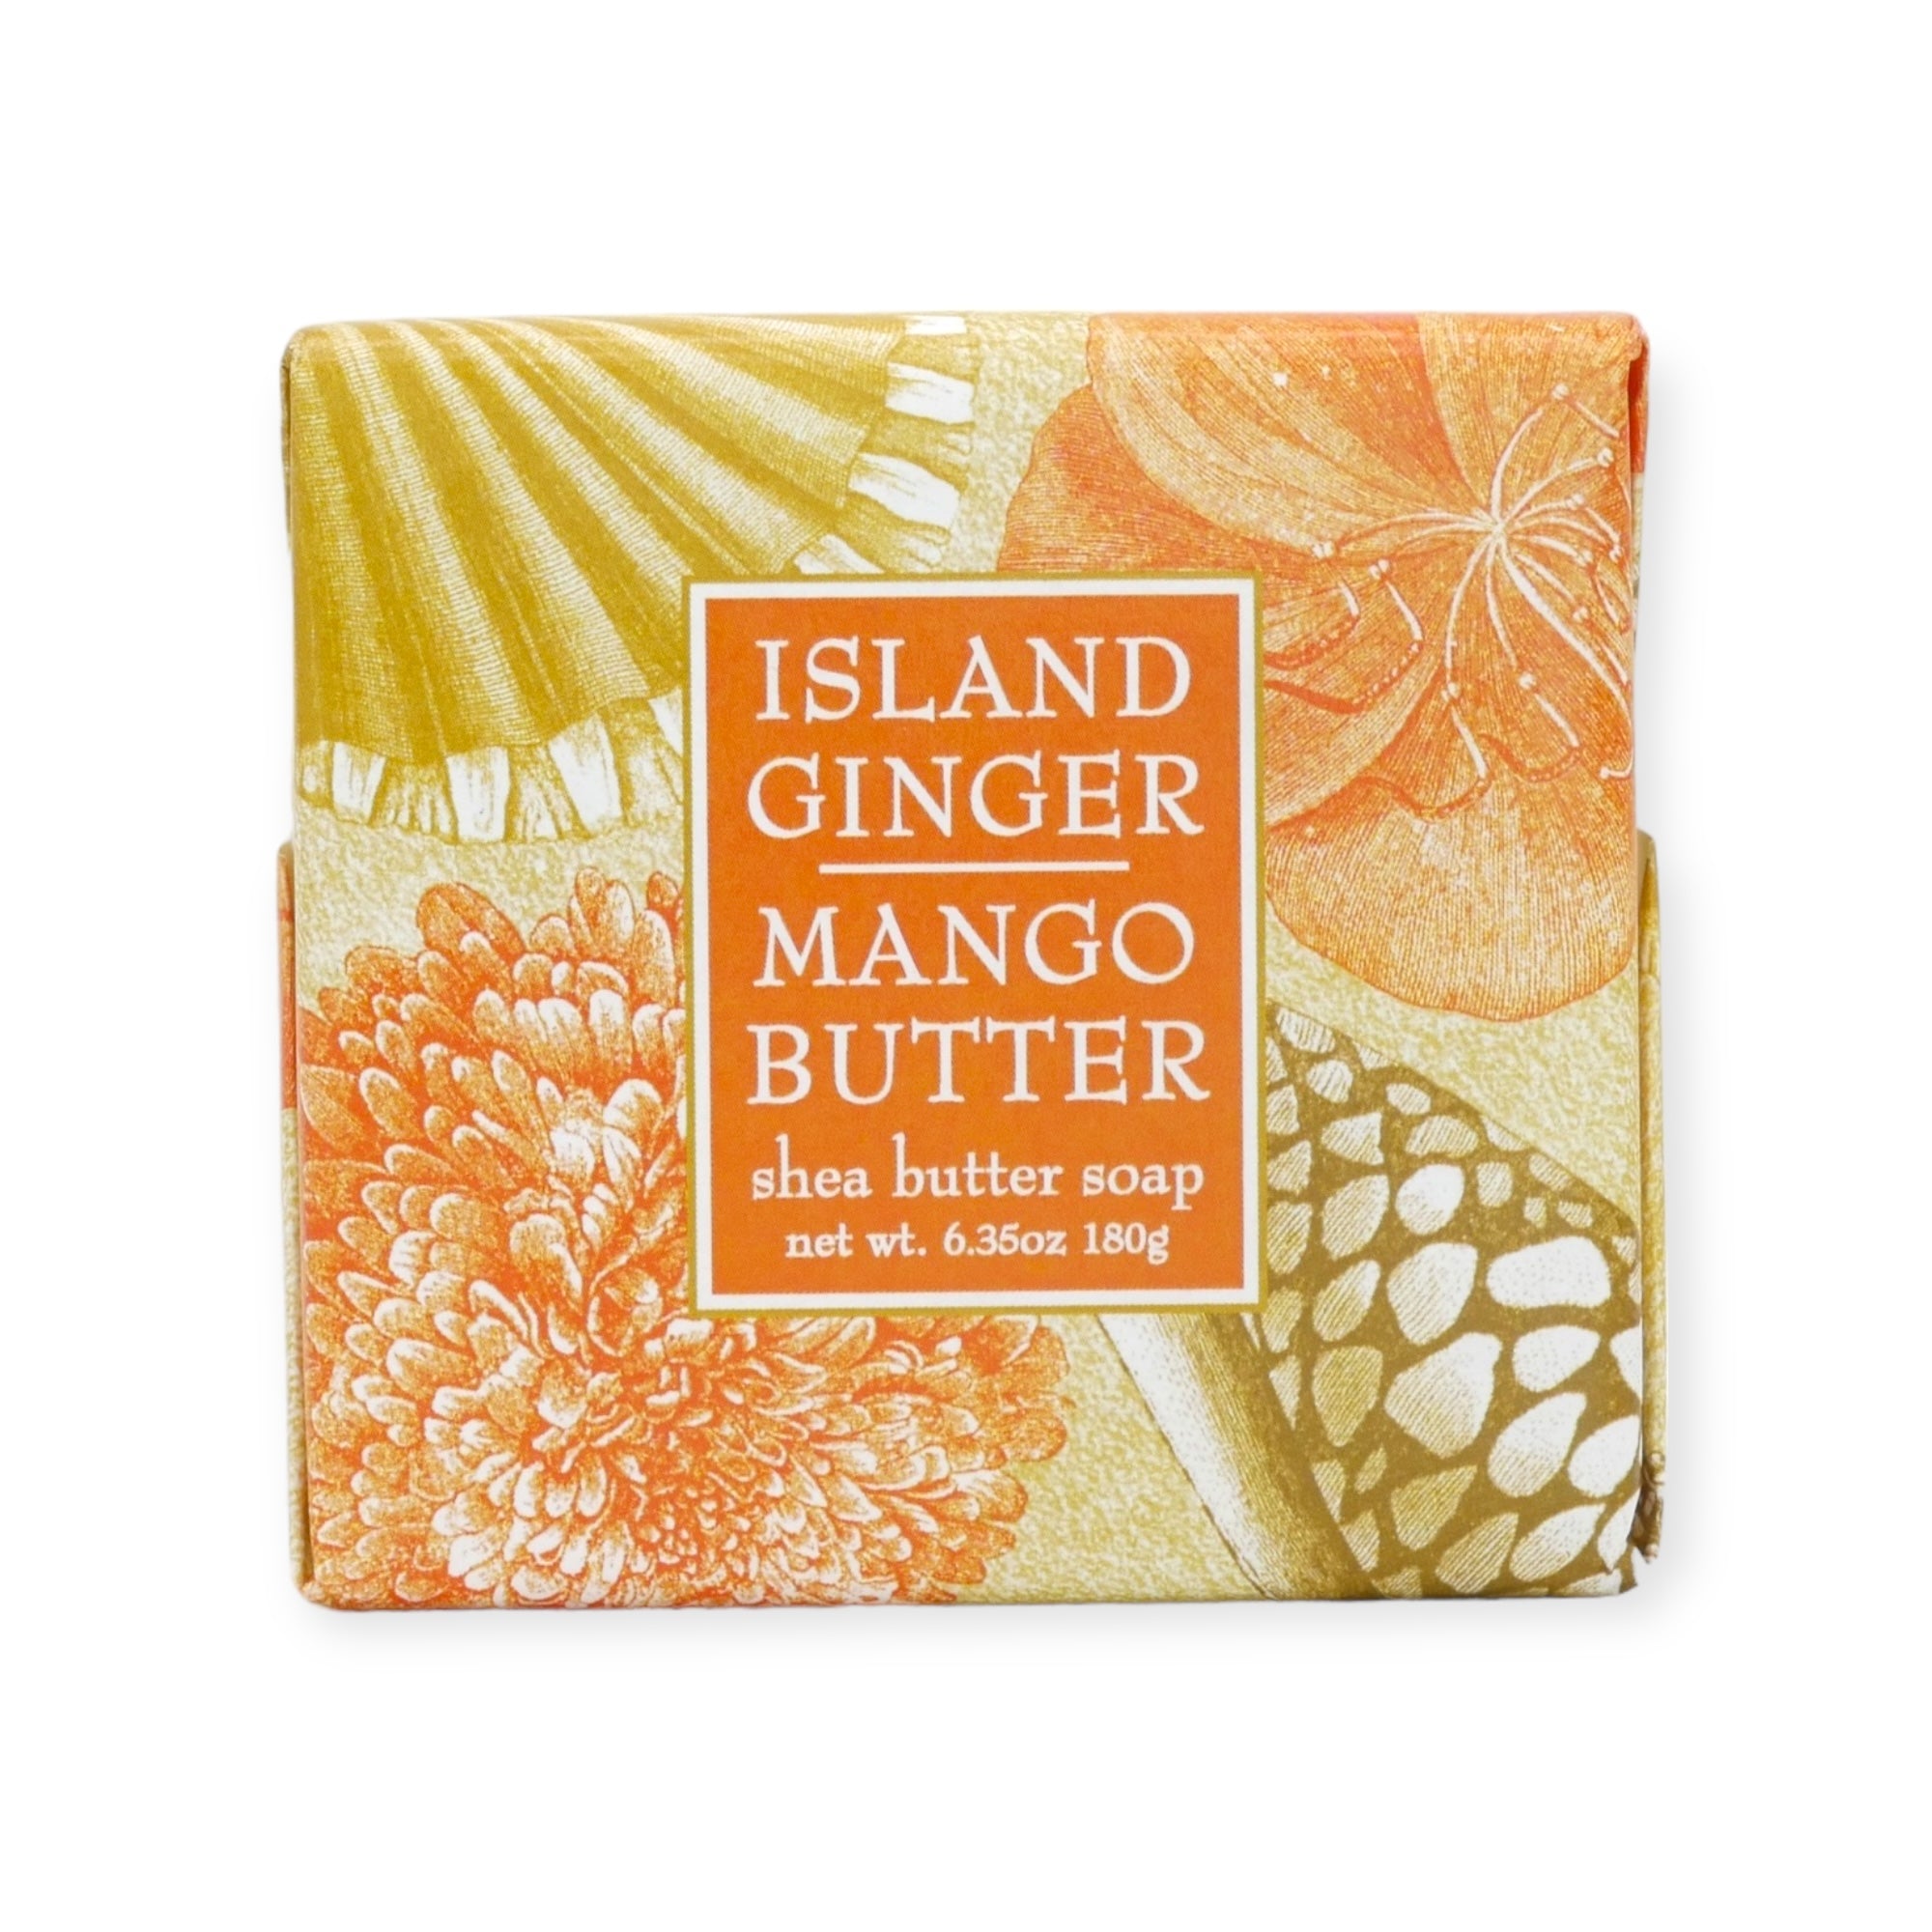 Island Ginger Mango Butter Shea Butter Soap by Greenwich Bay Trading Co.